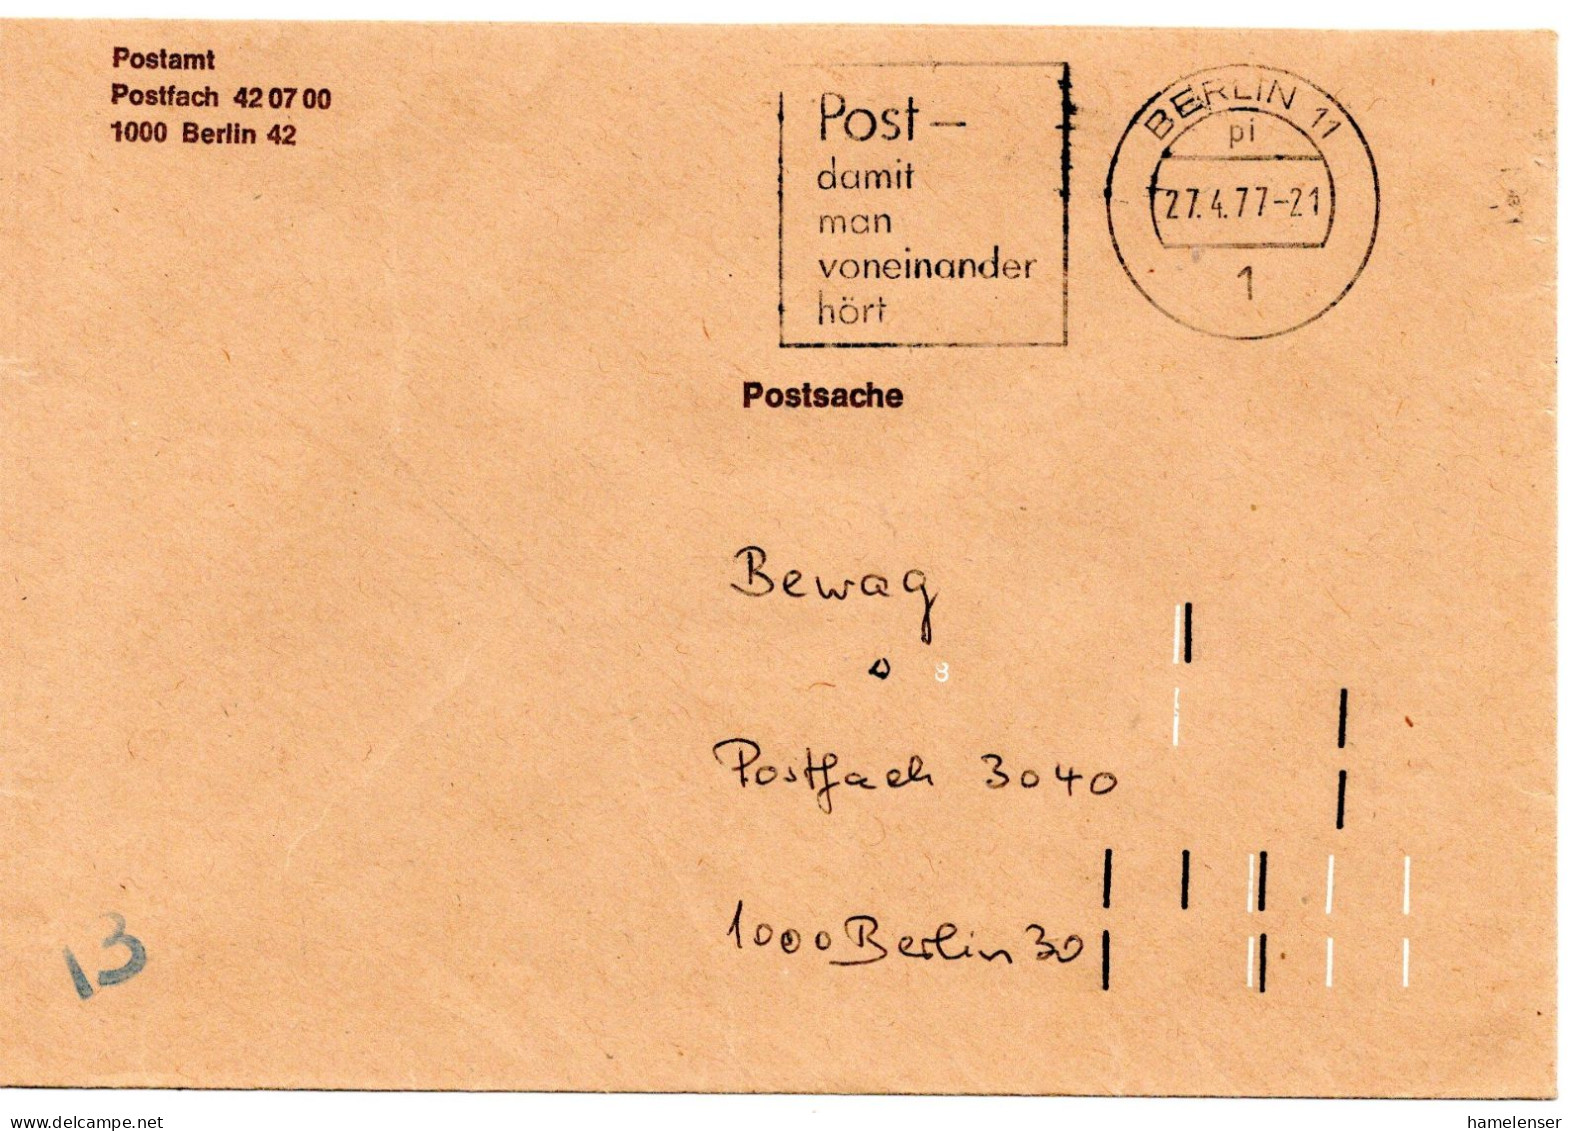 75864 - Berlin - 1977 - Postsache-OrtsBf BERLIN - ..., M Doppel-Codierung - Covers & Documents